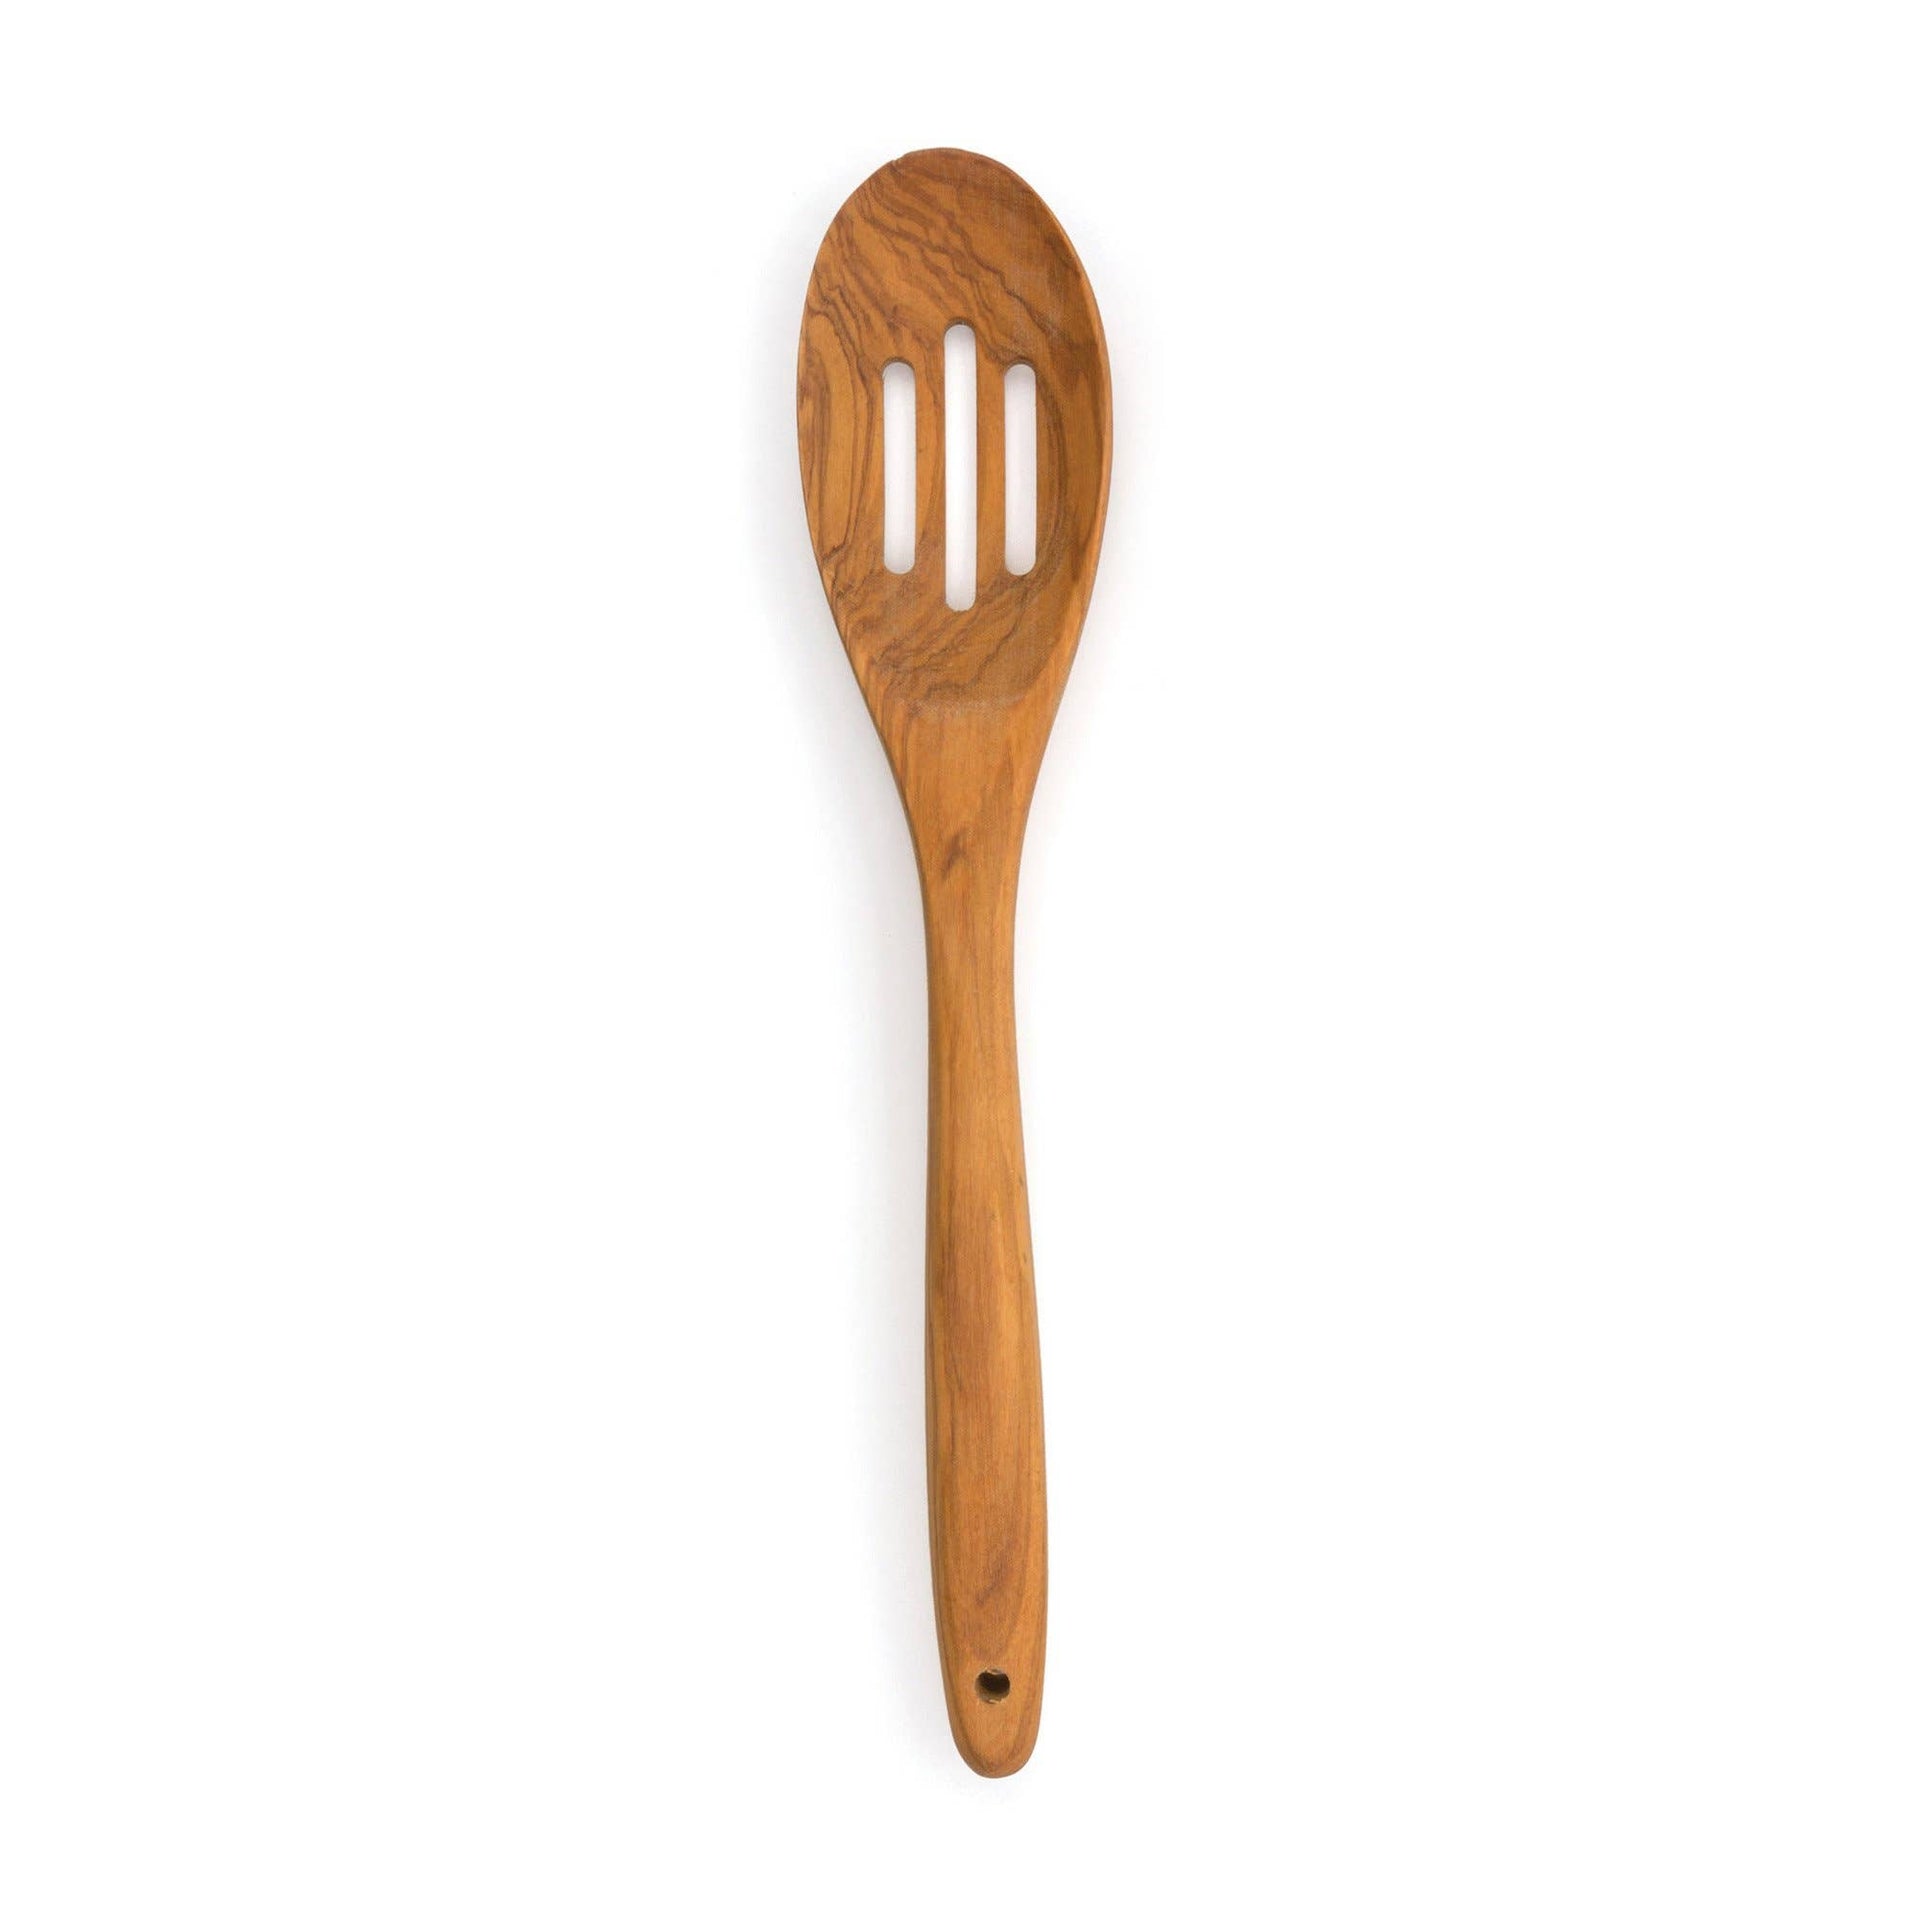 Olive Wood Spoon or Spatula